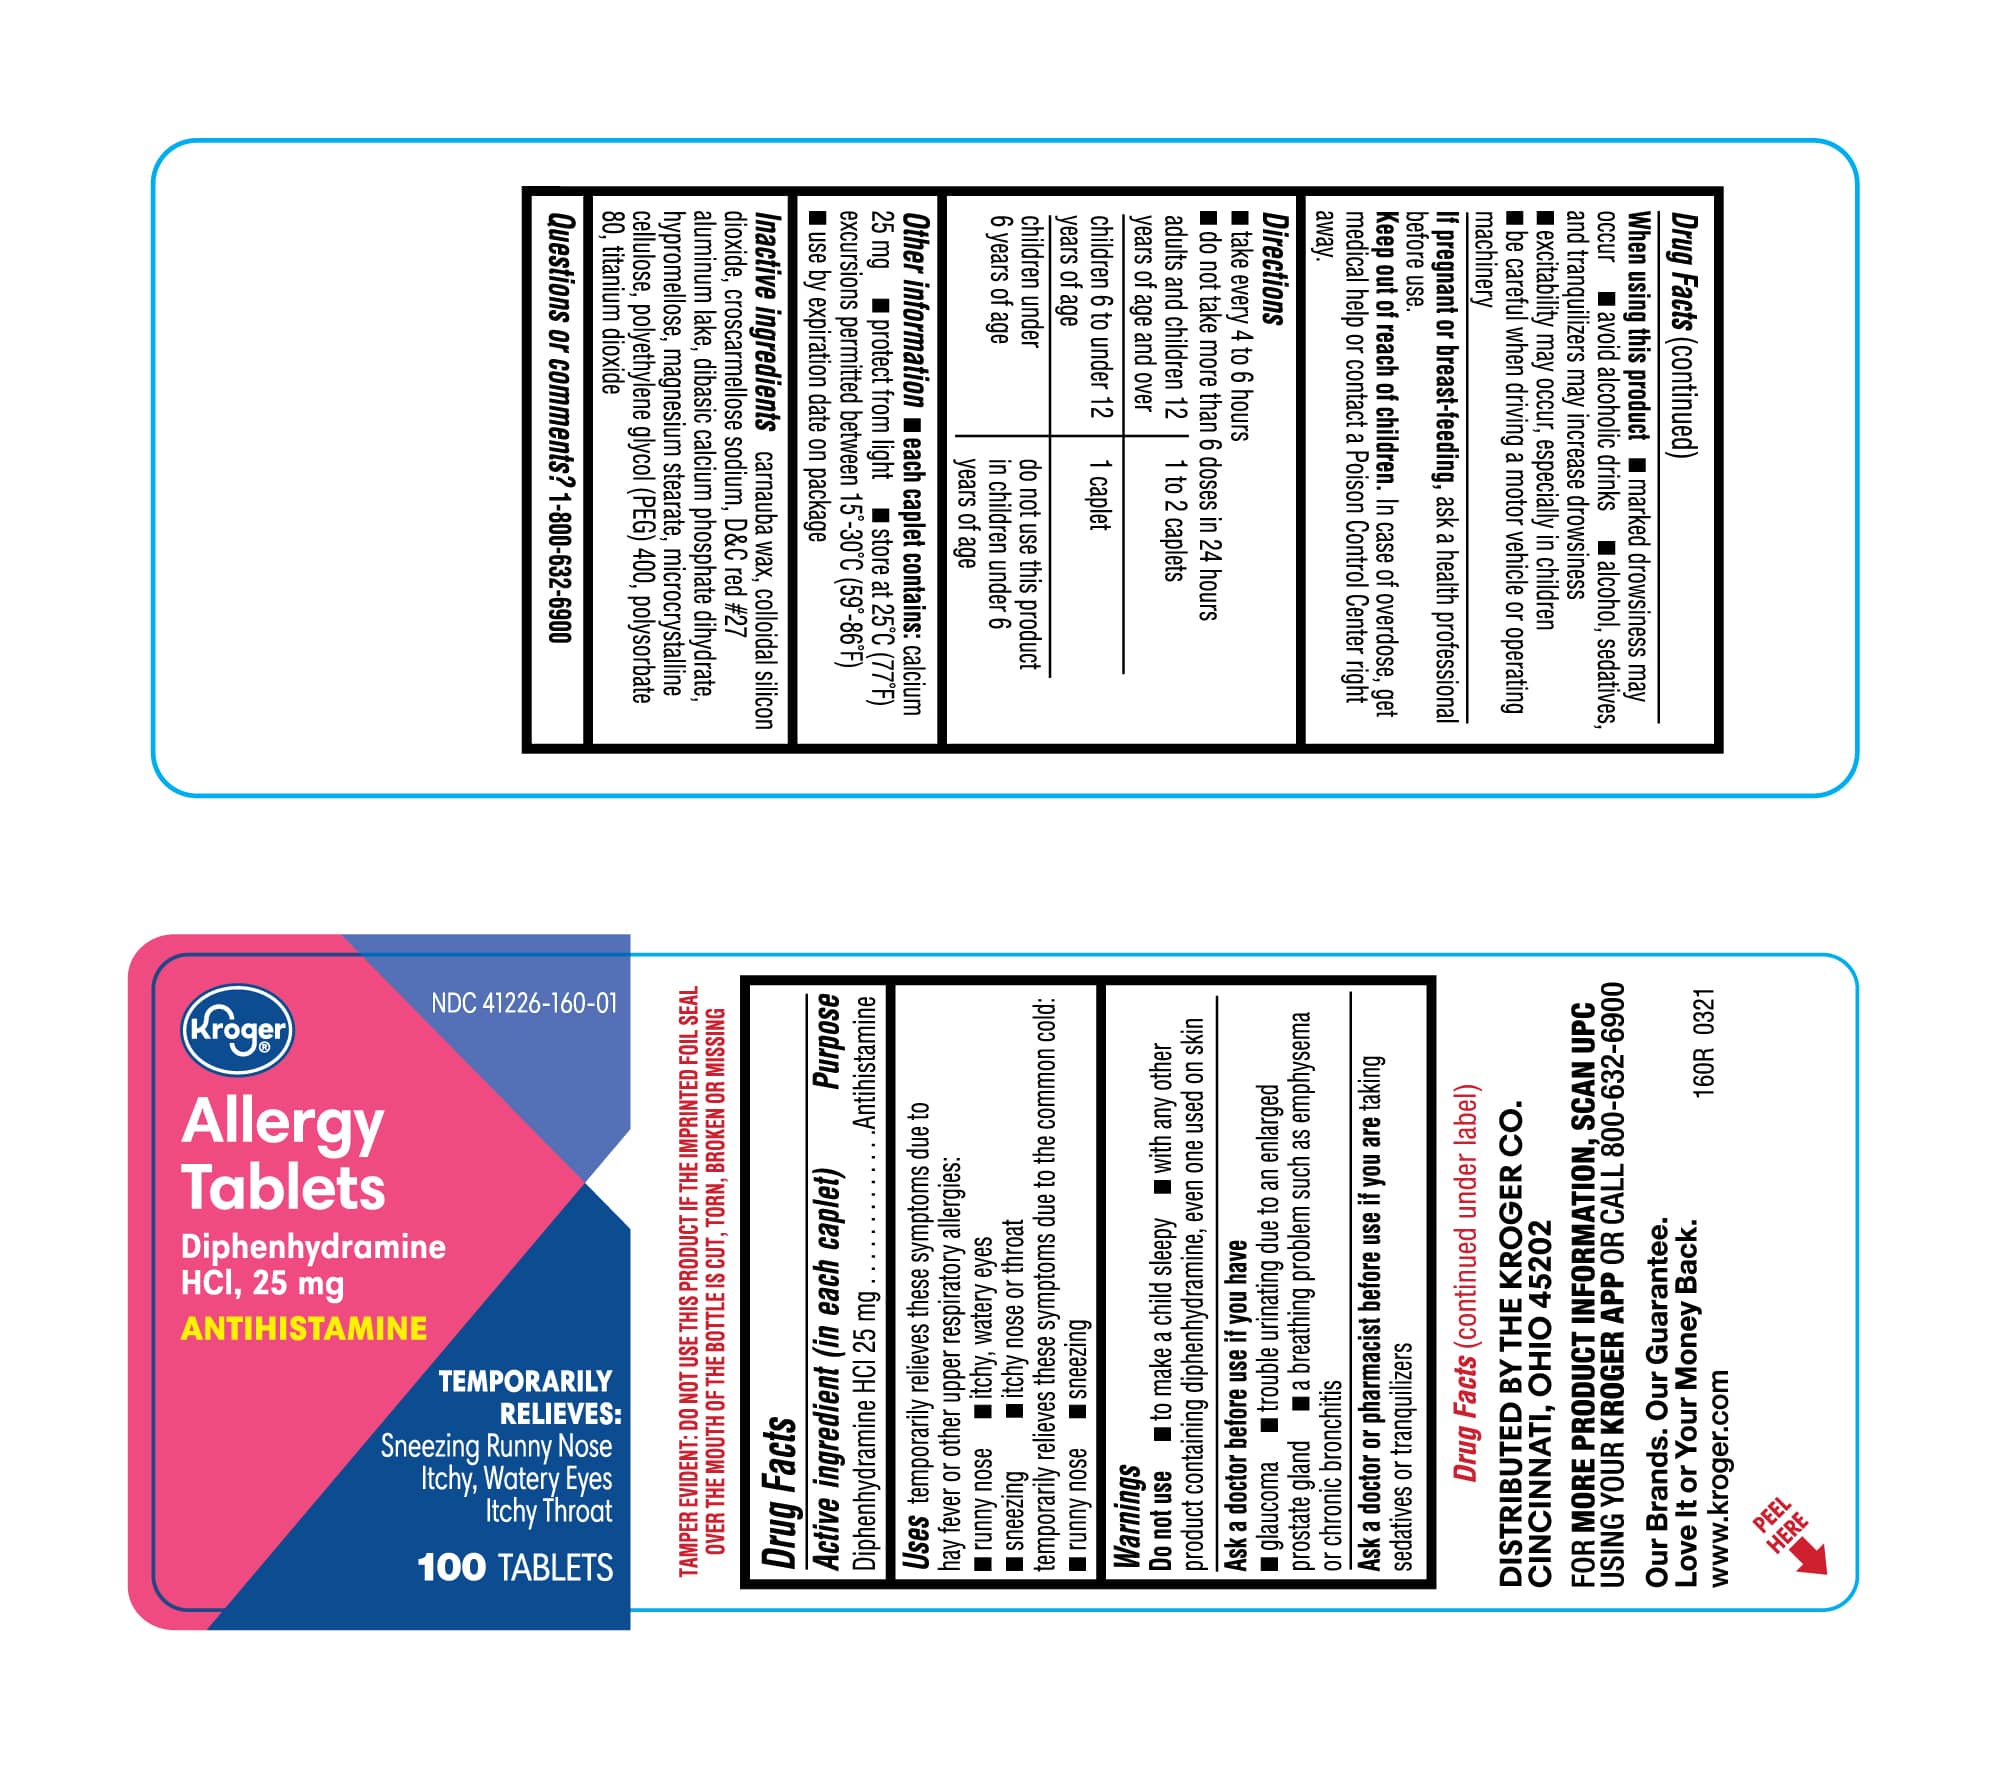 Allergy 100 label